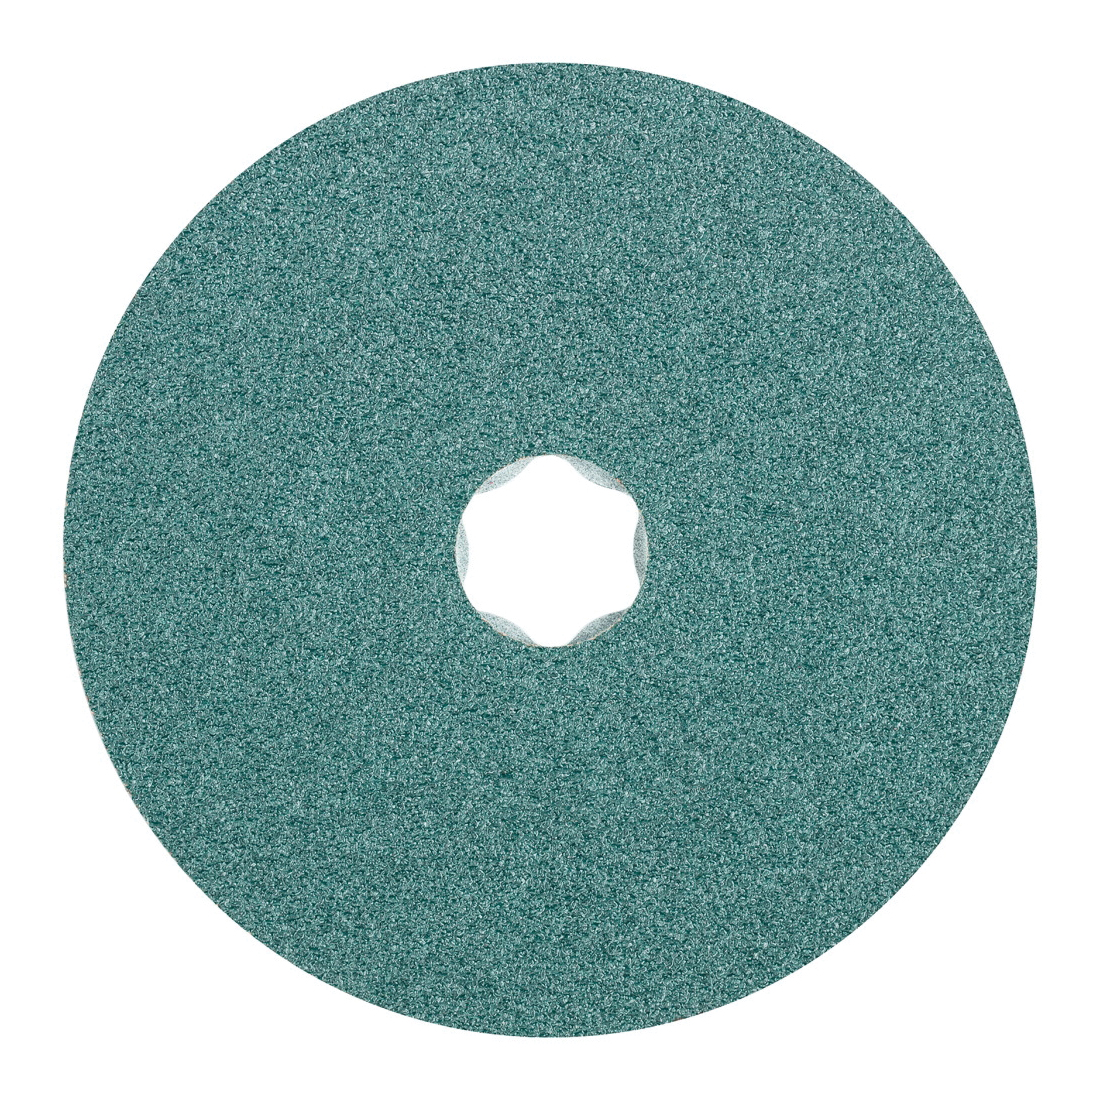 PFERD COMBICLICK® 40132 Coated Abrasive Disc, 4-1/2 in Dia, 50 Grit, Zirconia Alumina Abrasive